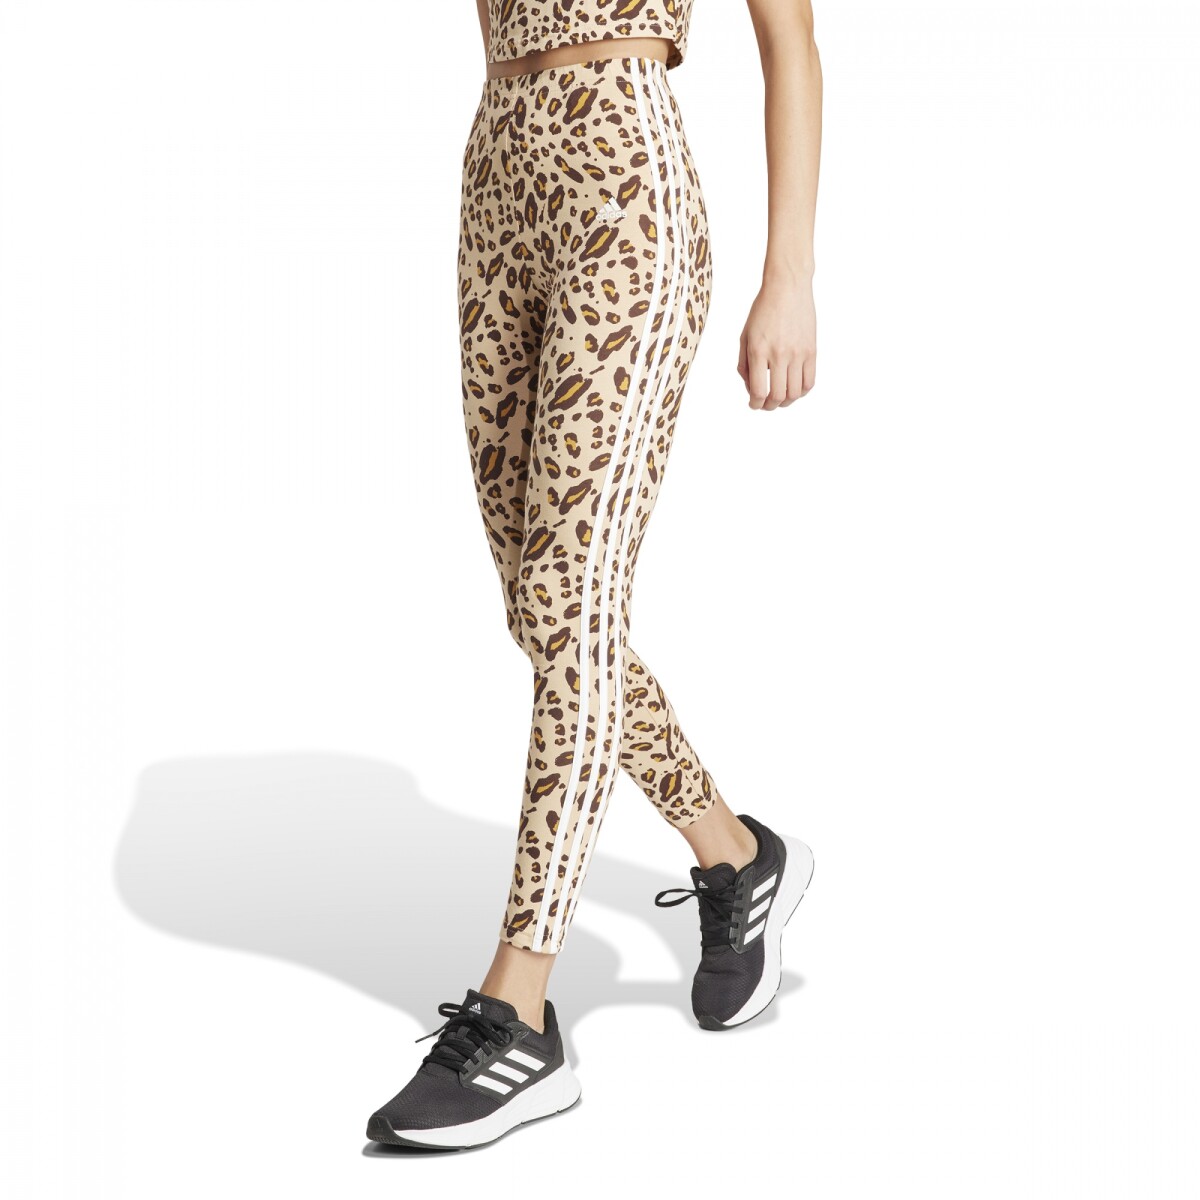 Calza Estampado Animals Adidas - Beige/Leopardo 